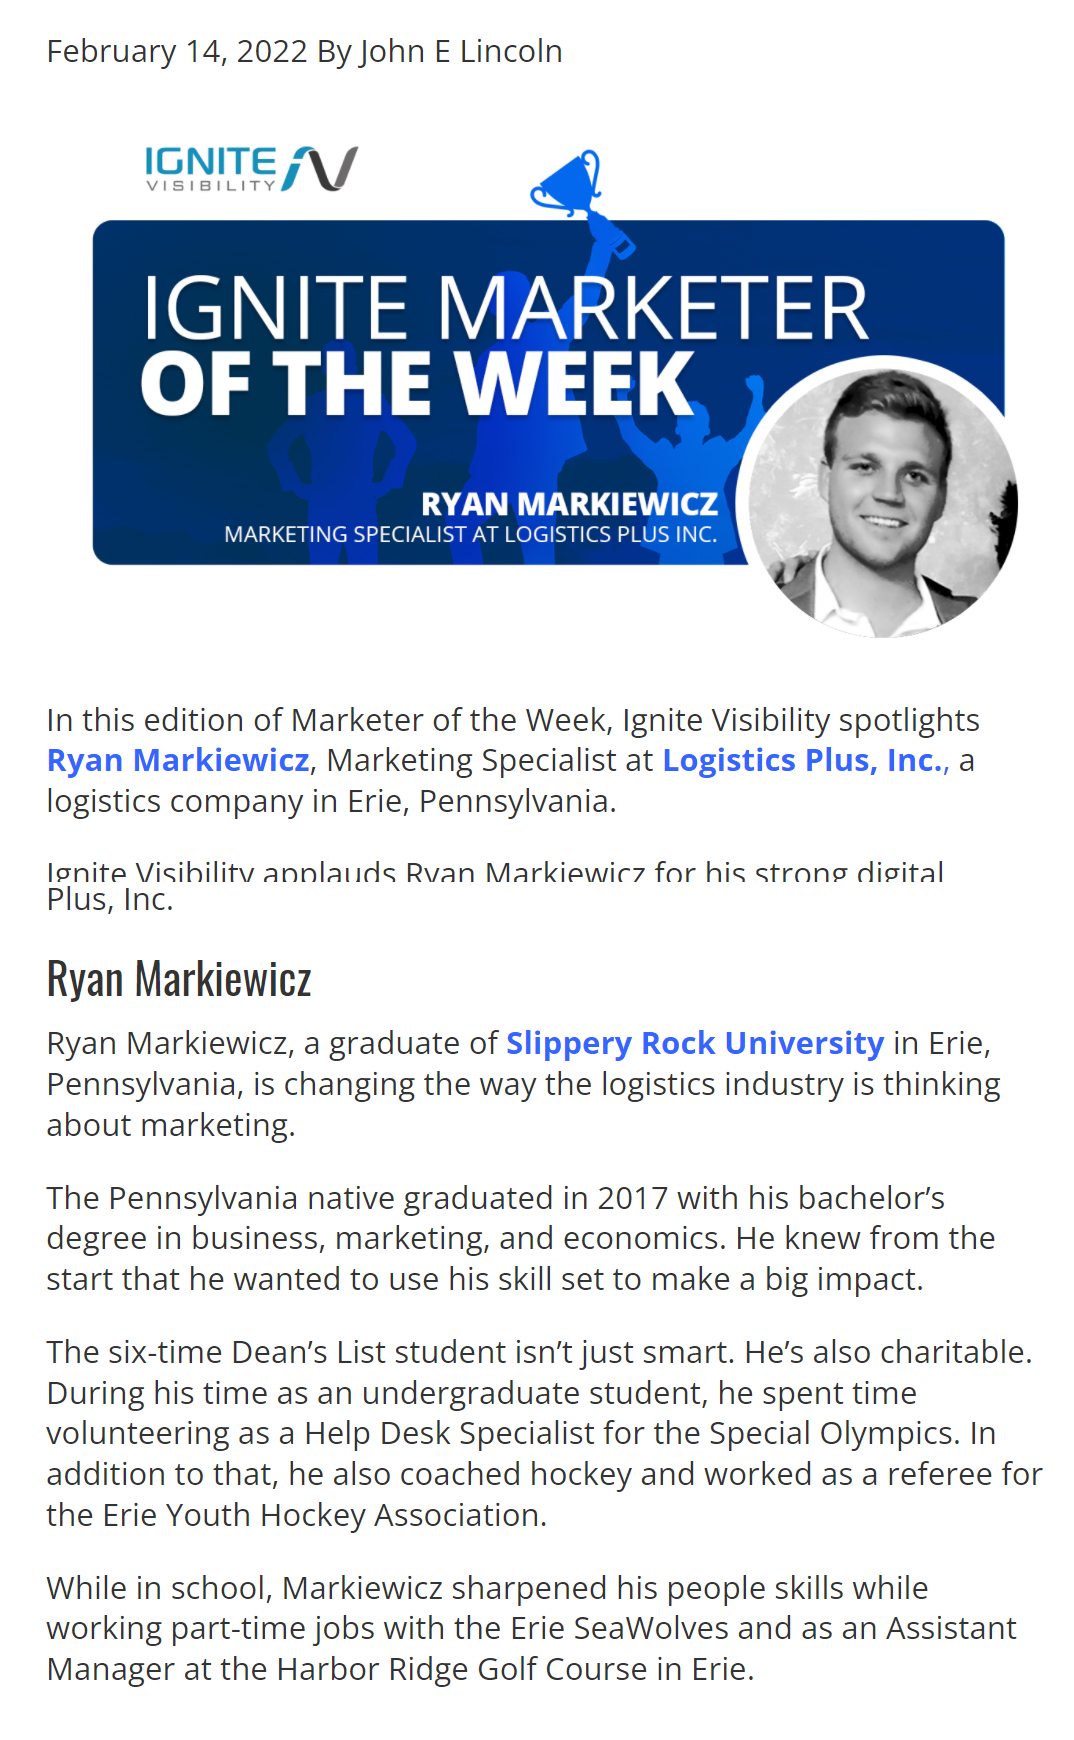 Ryan Ignite Marketer of the Week article